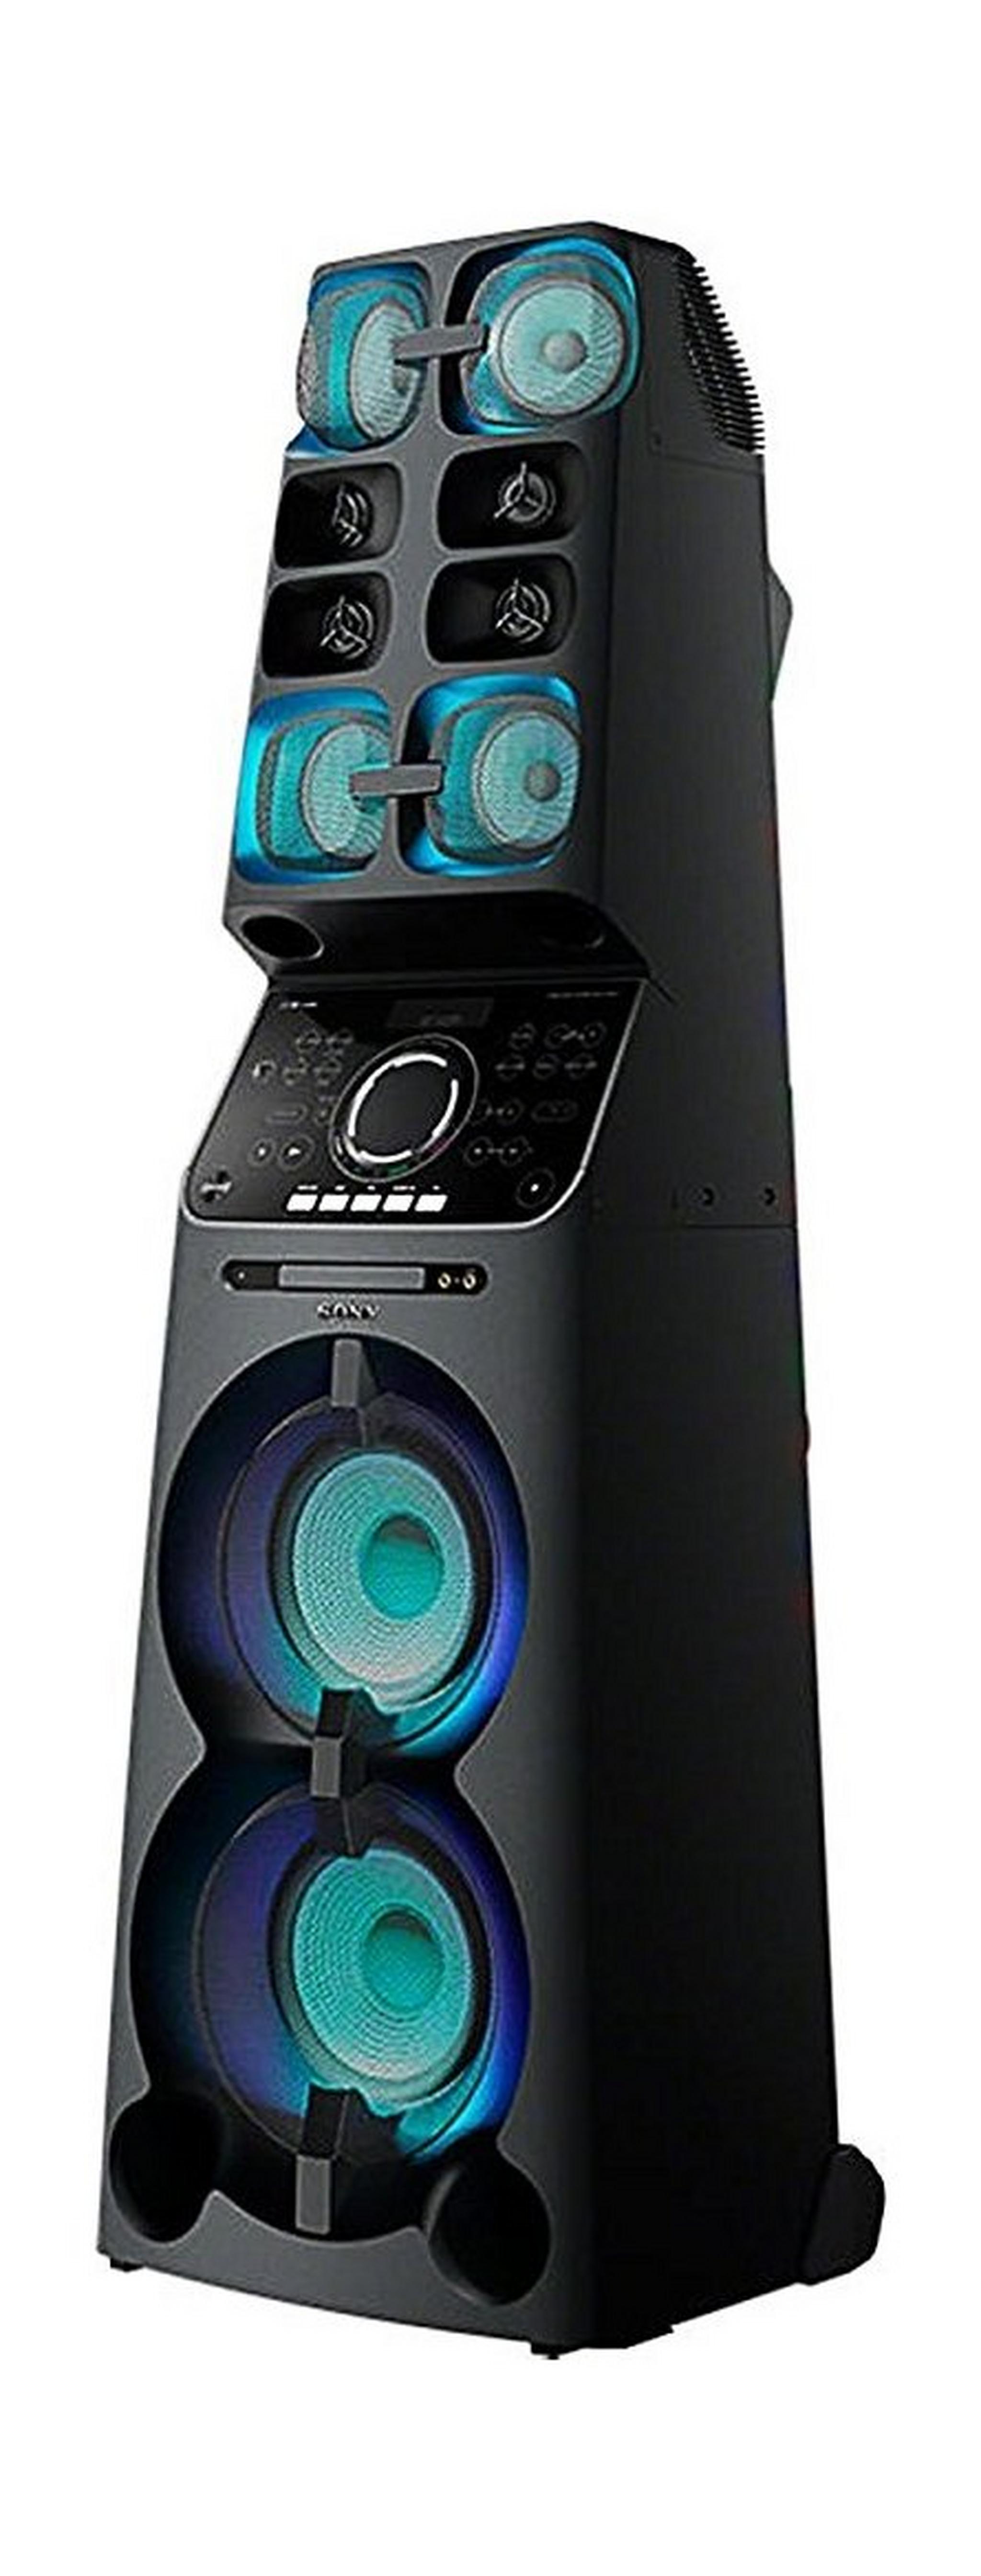 Sony High Power CD Bluetooth Audio System (MHC-V90DW) - Black